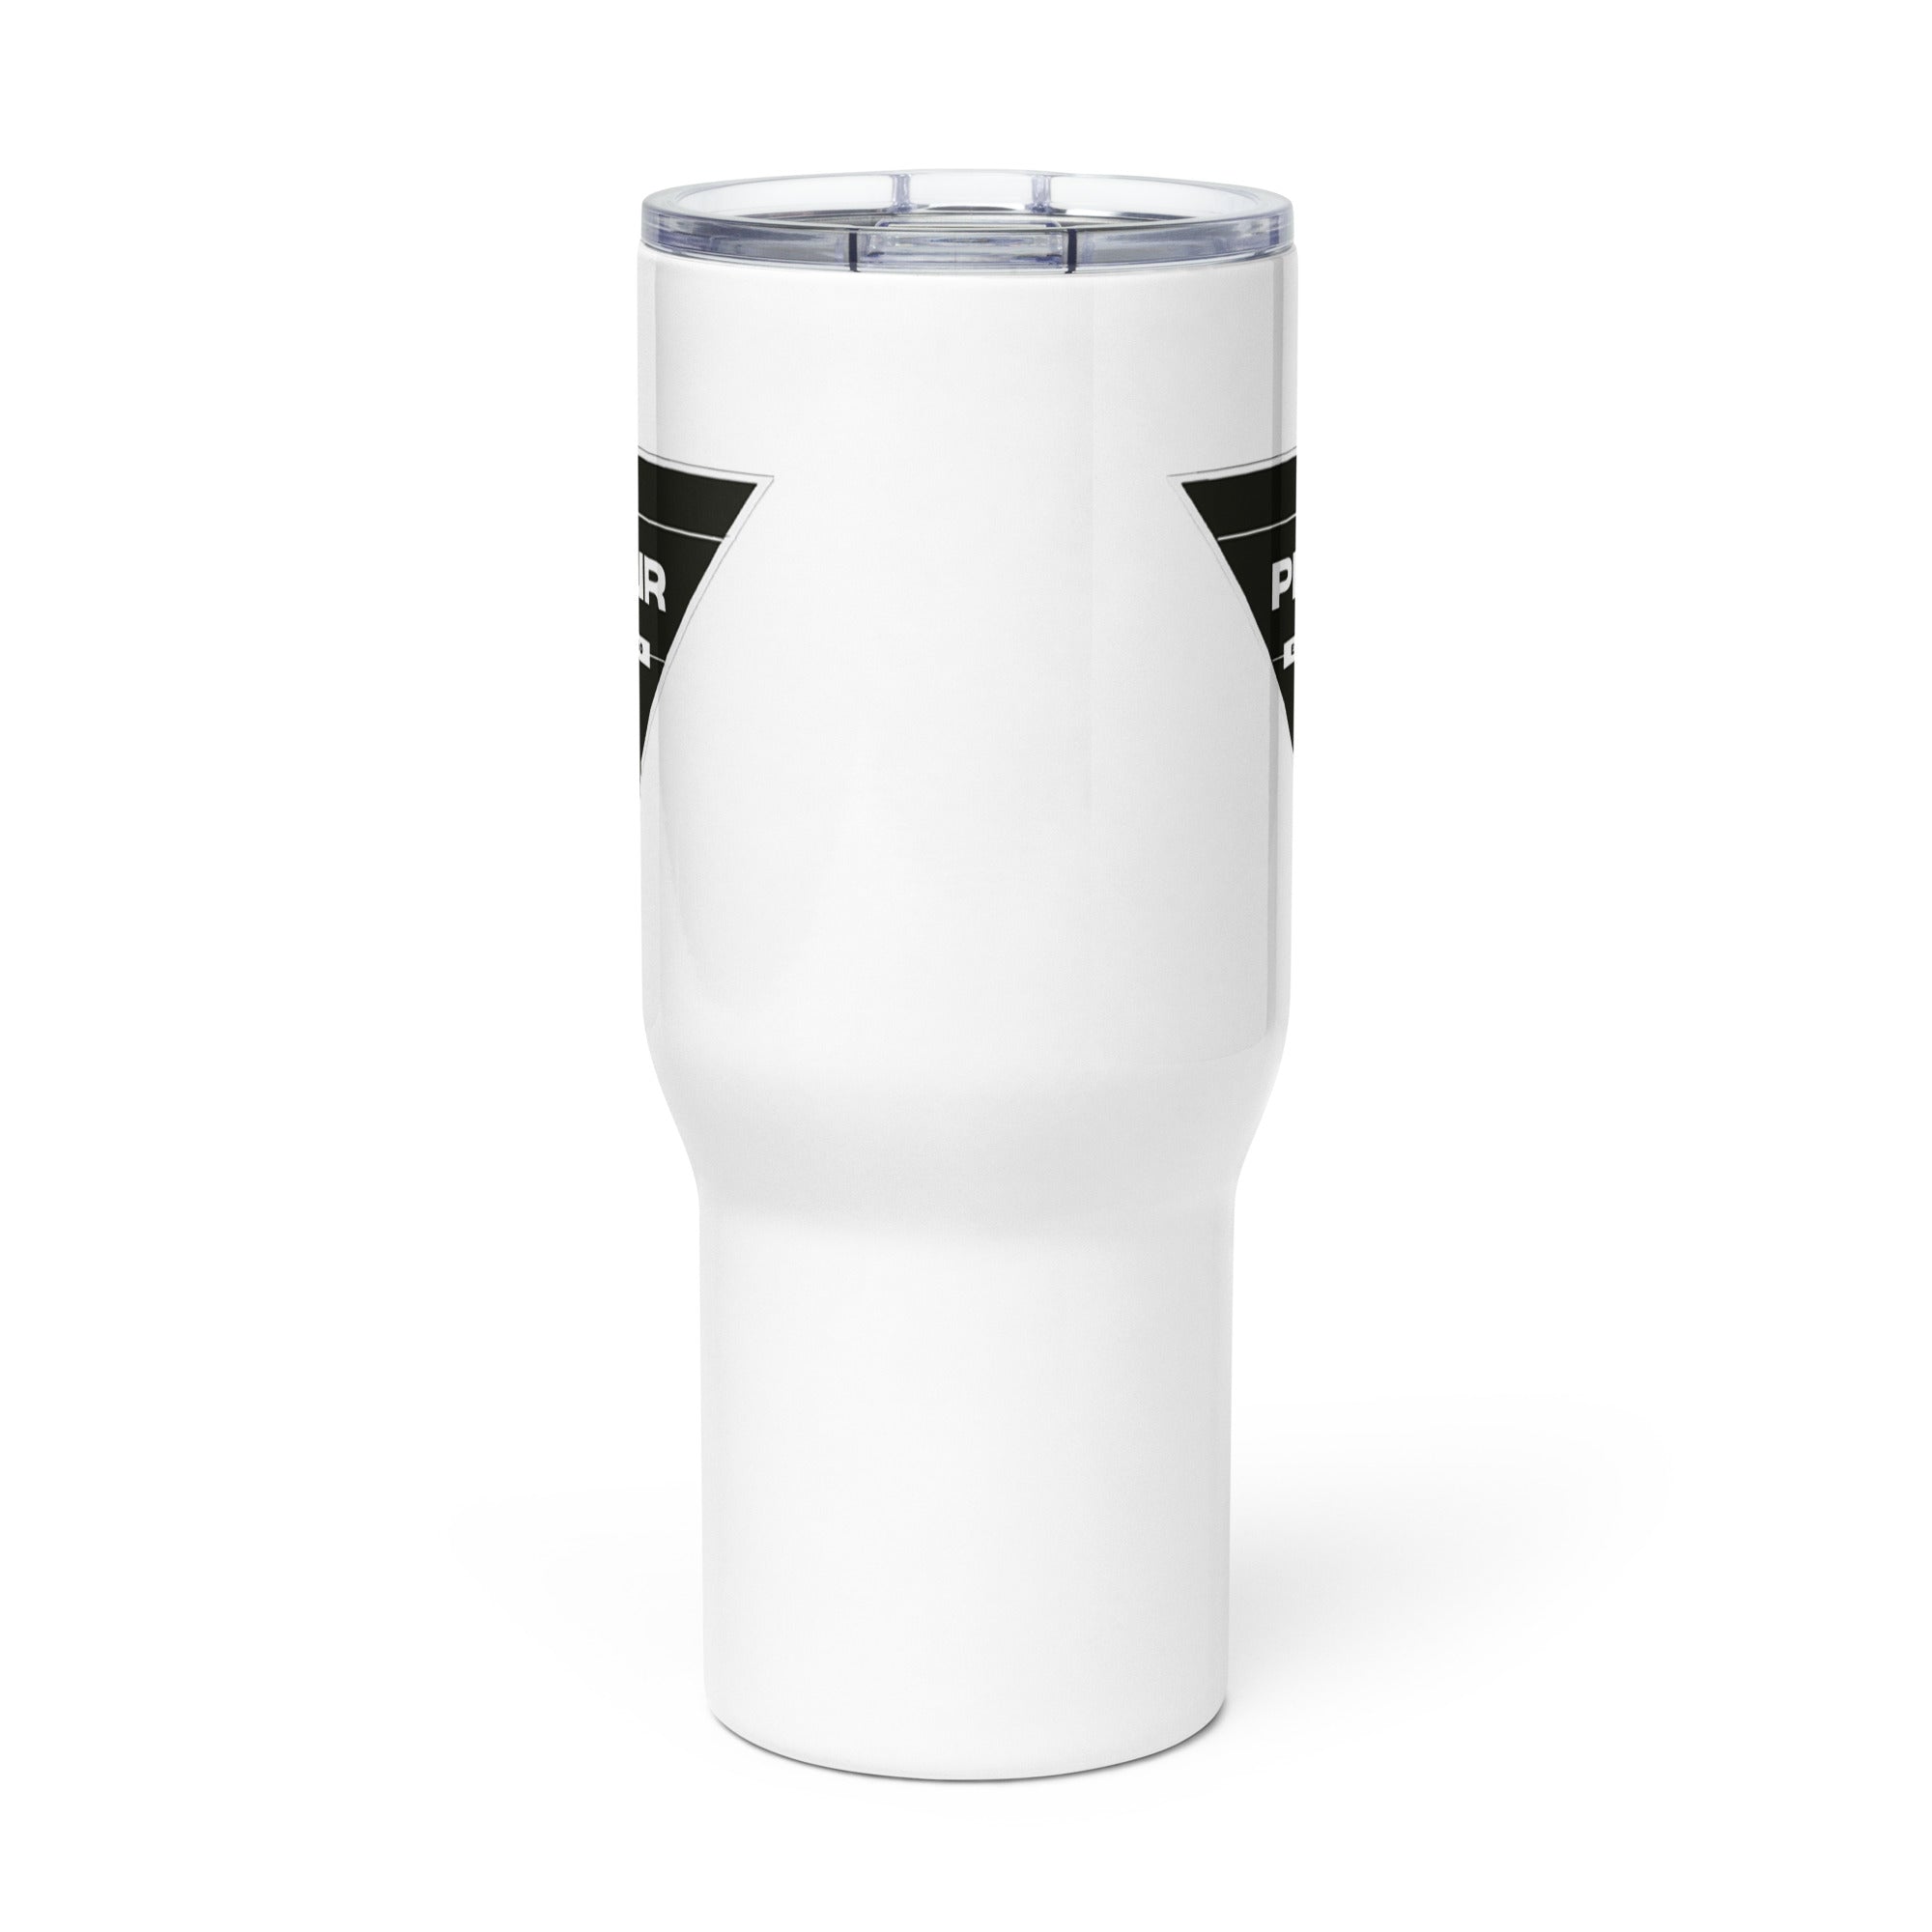 Peair - Travel mug with a handle